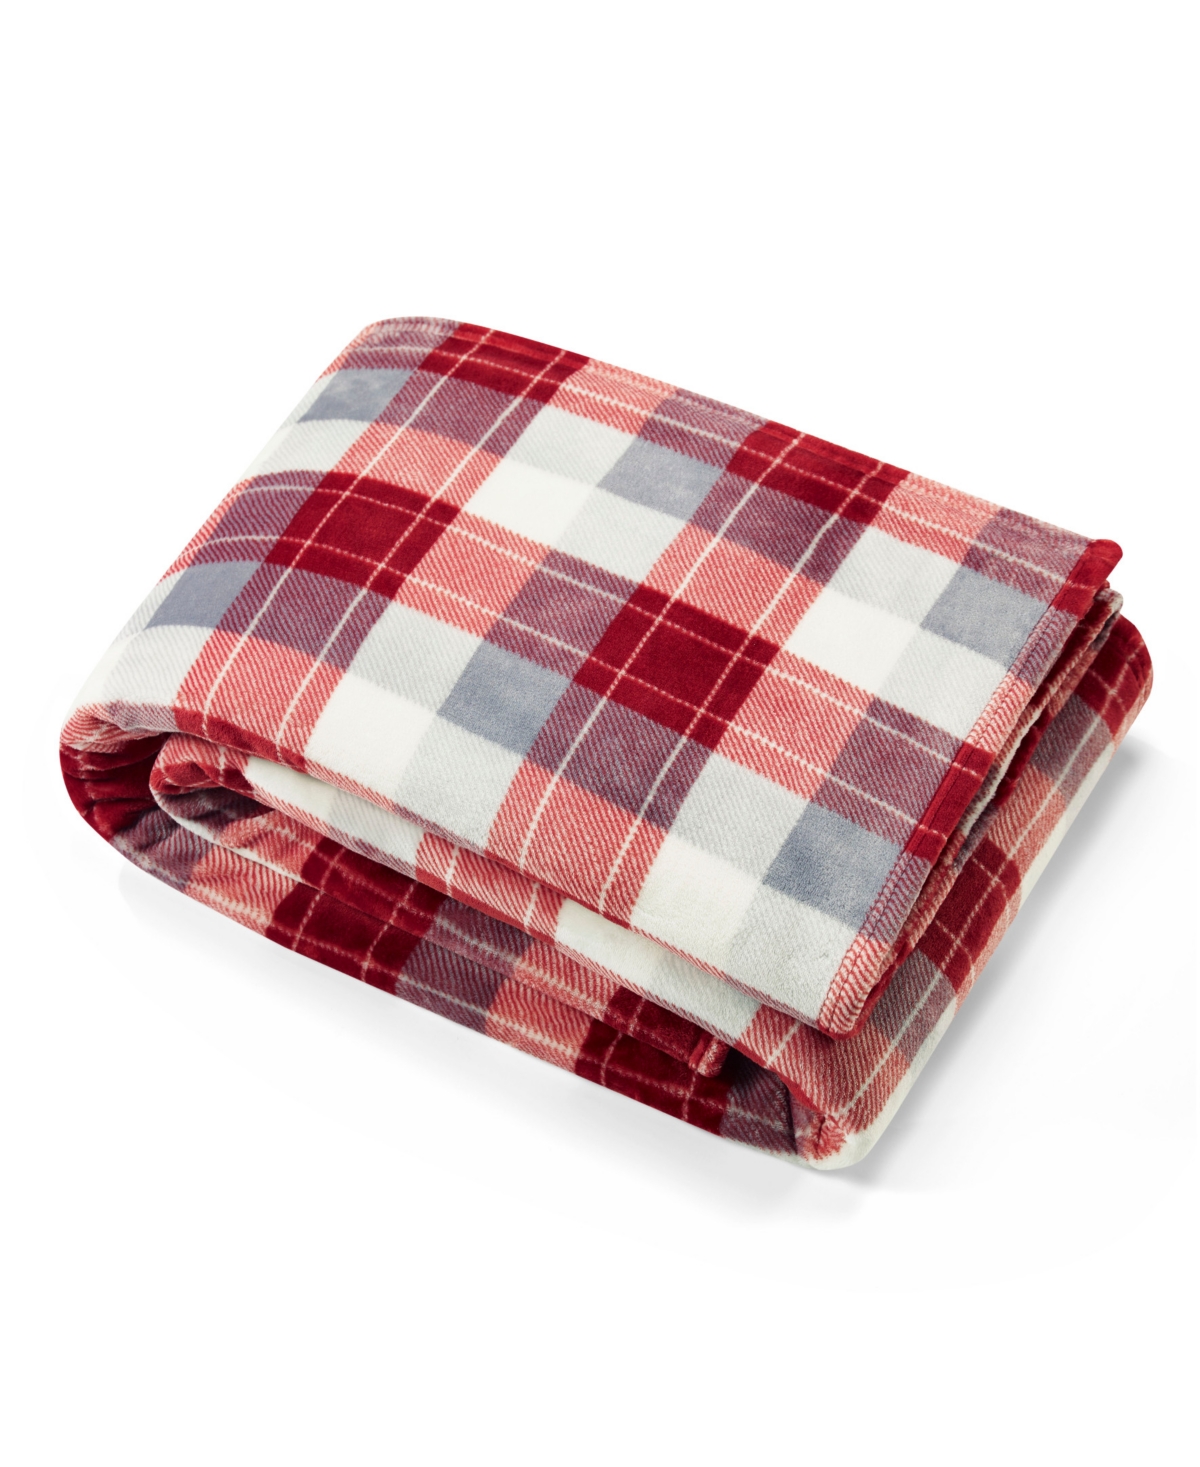 Nautica Ultra Soft Plush Blanket, Full/queen In Bluff Plaid Red